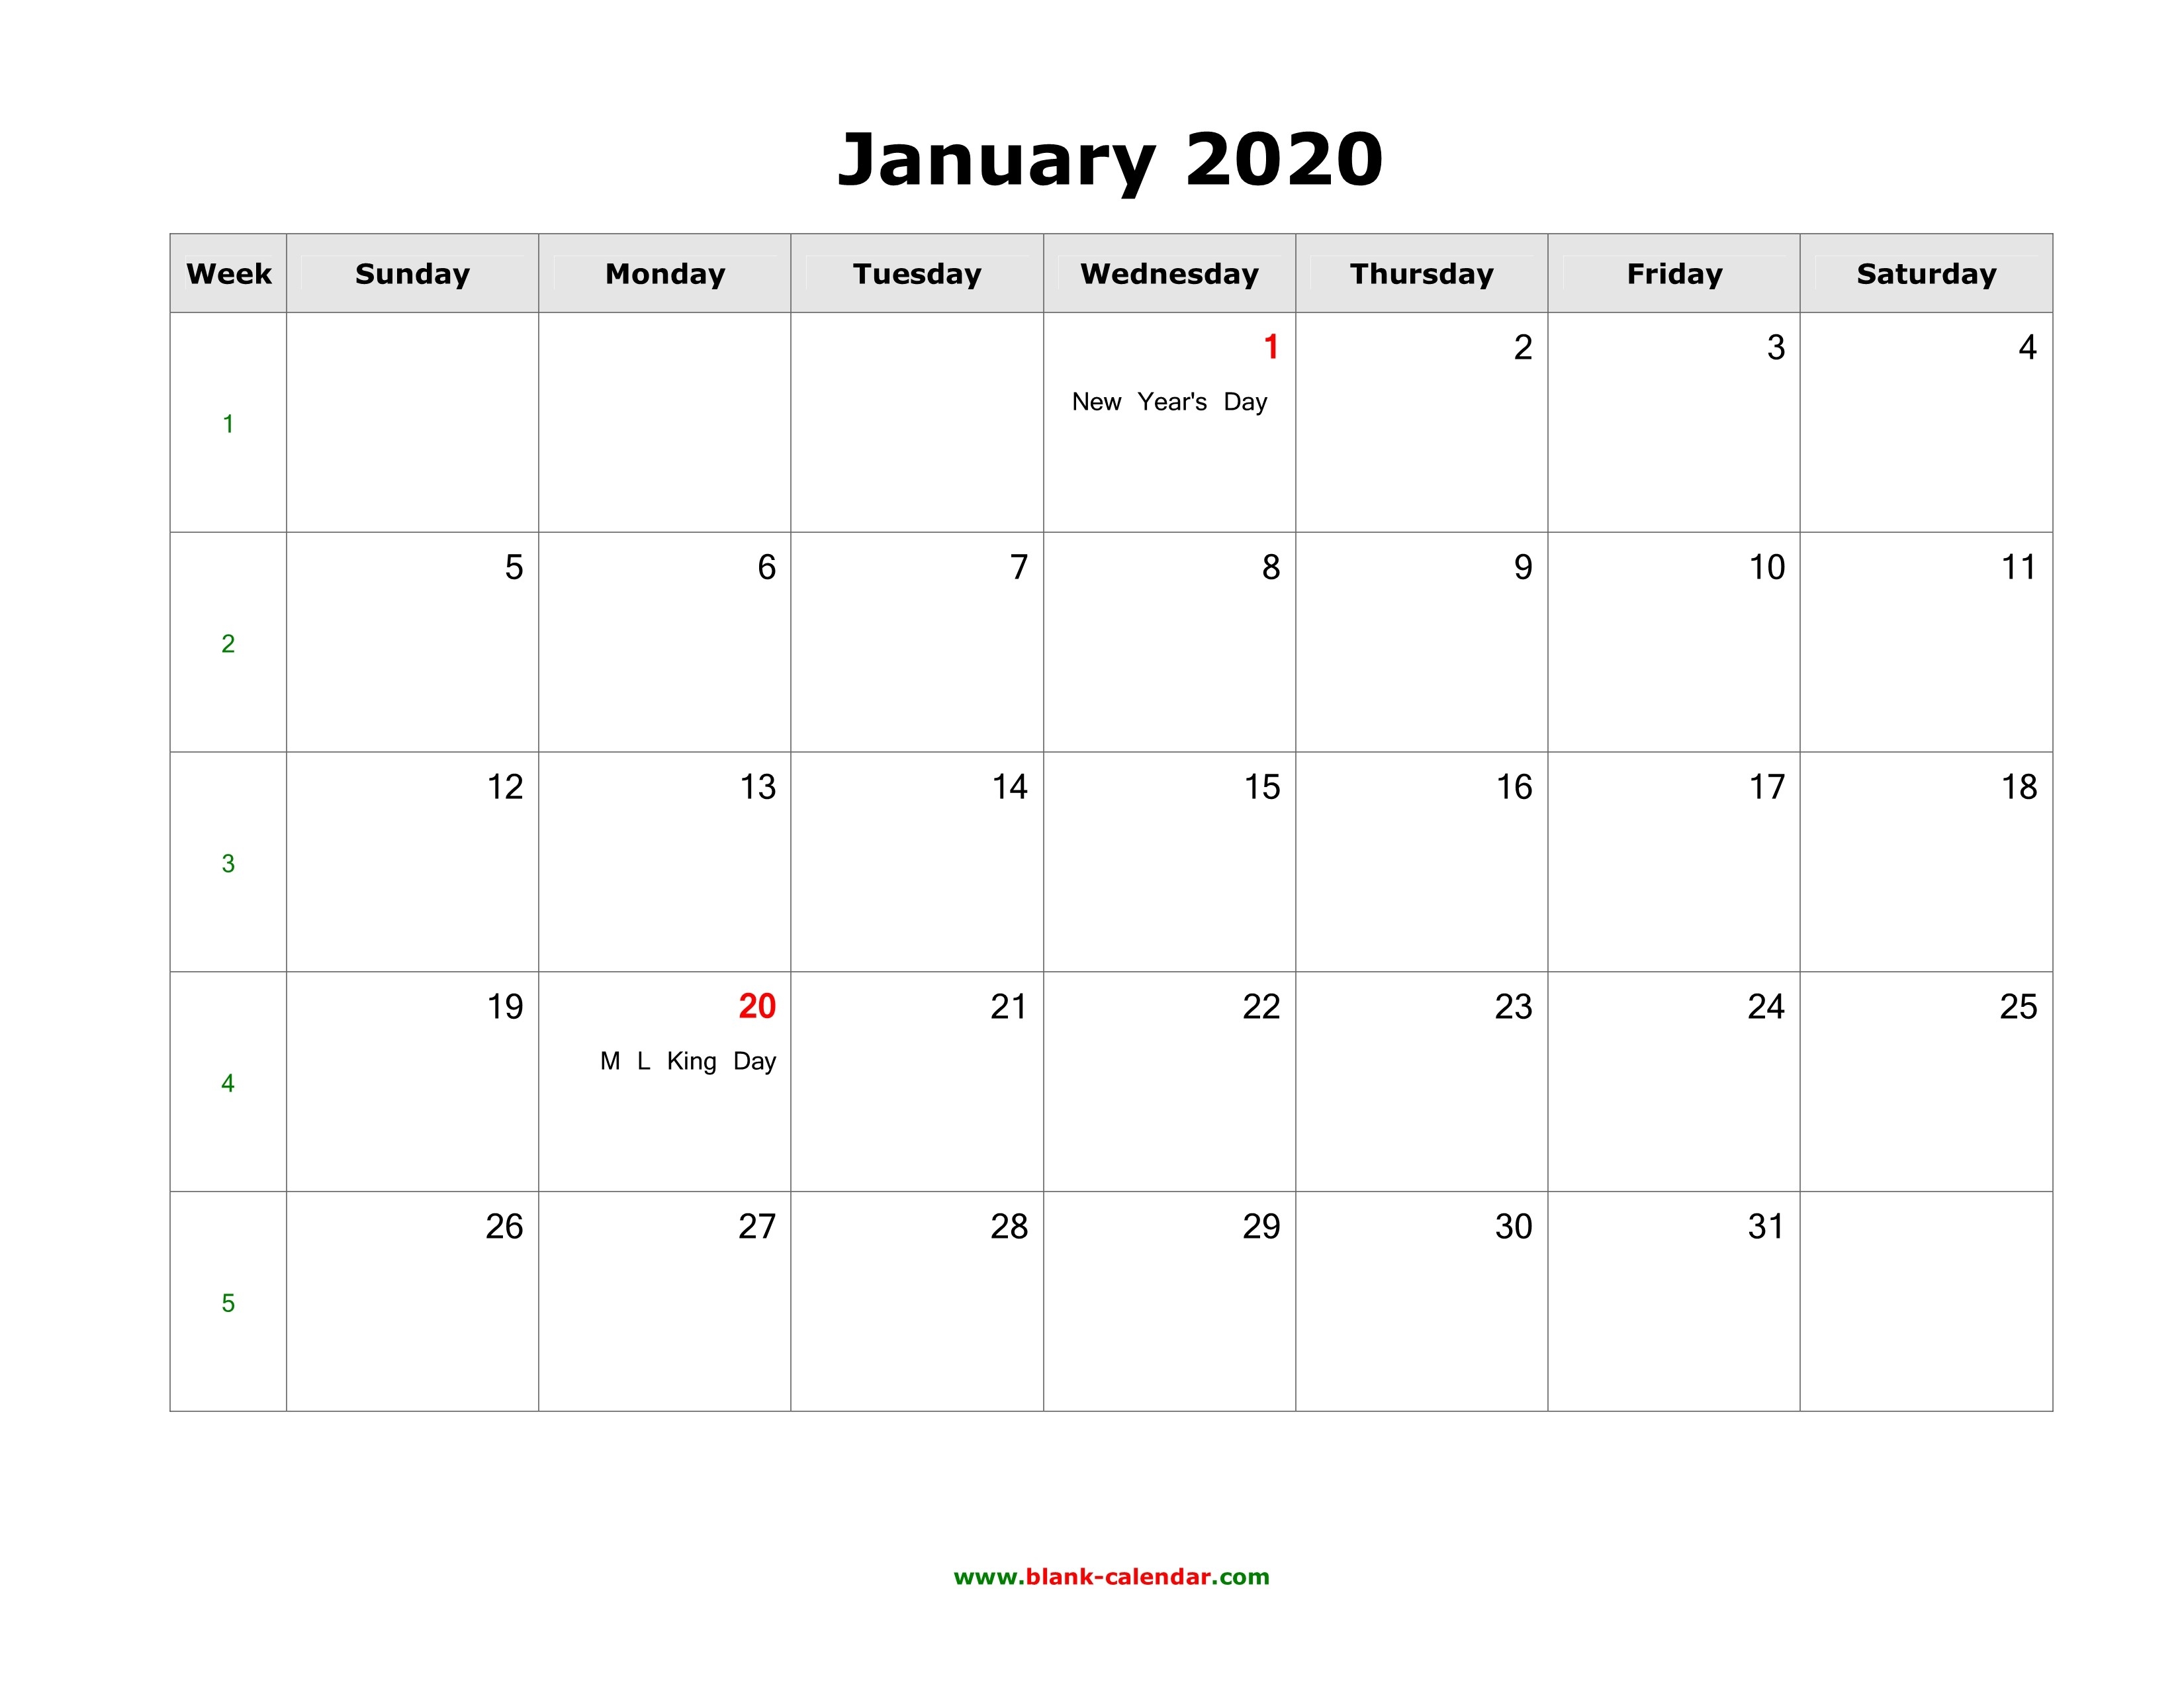 January 2020 Blank Calendar | Free Download Calendar Templates-January 2020 Vertical Calendar